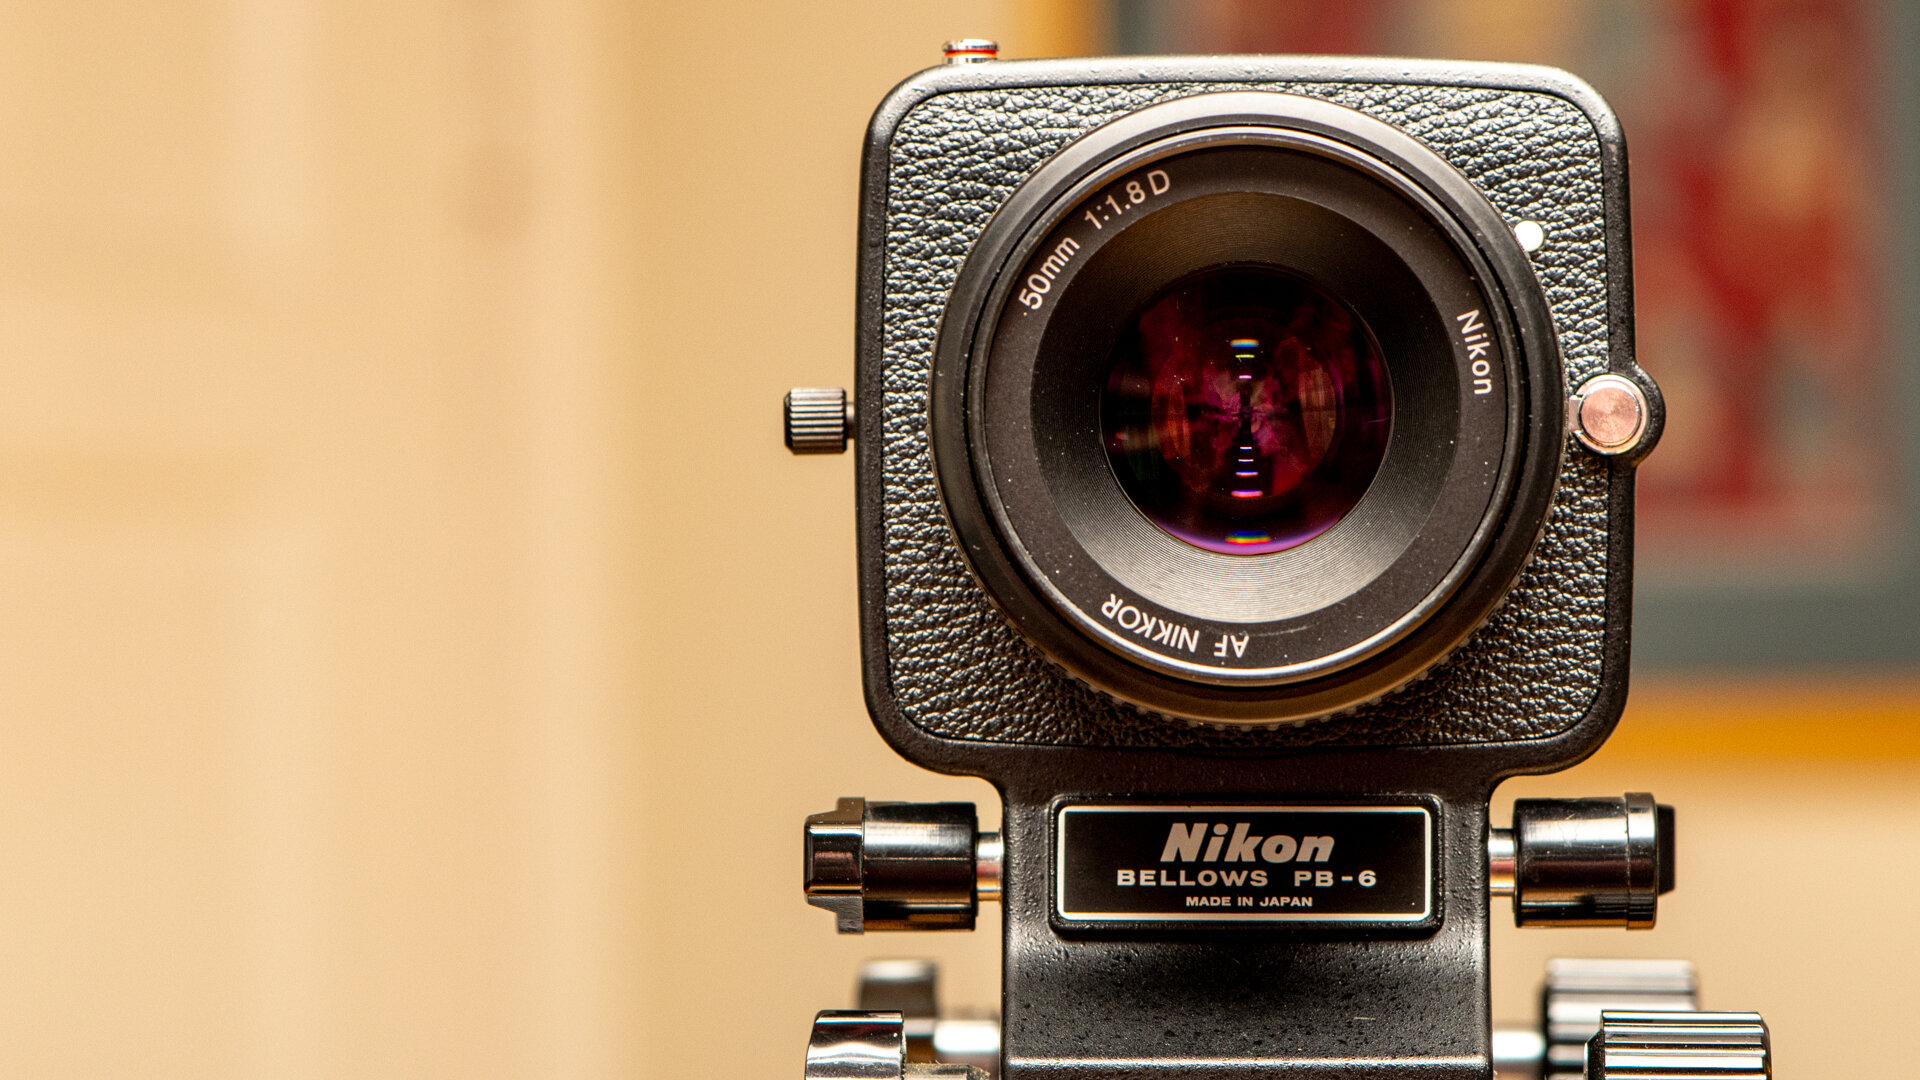 Occasionally produce carriage Nikon PB-6 bellows - surprising features — Allan Walls Photography